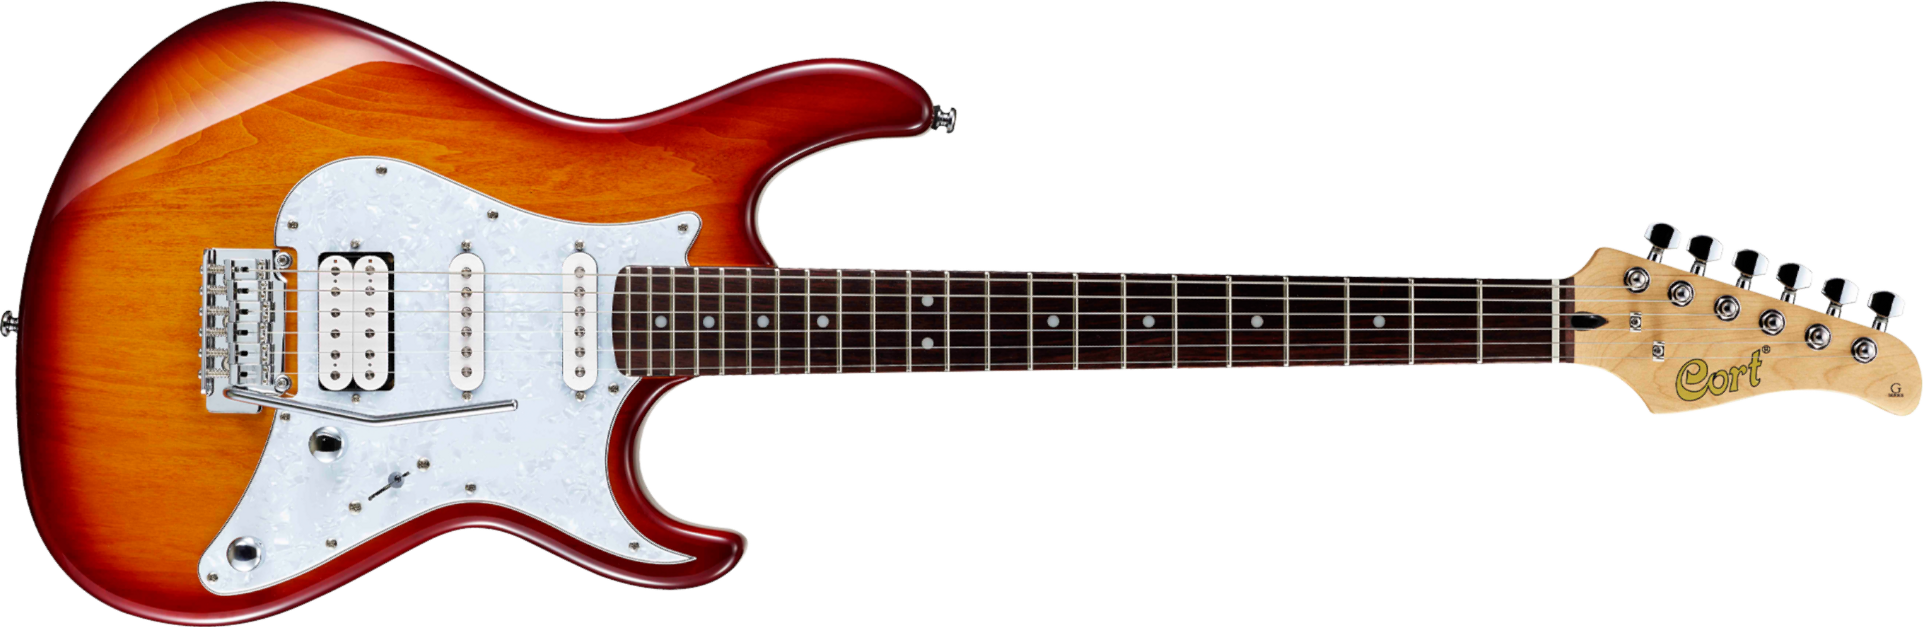 Cort G250 Tab Hss Trem - Tobacco Sunburst - Str shape electric guitar - Main picture